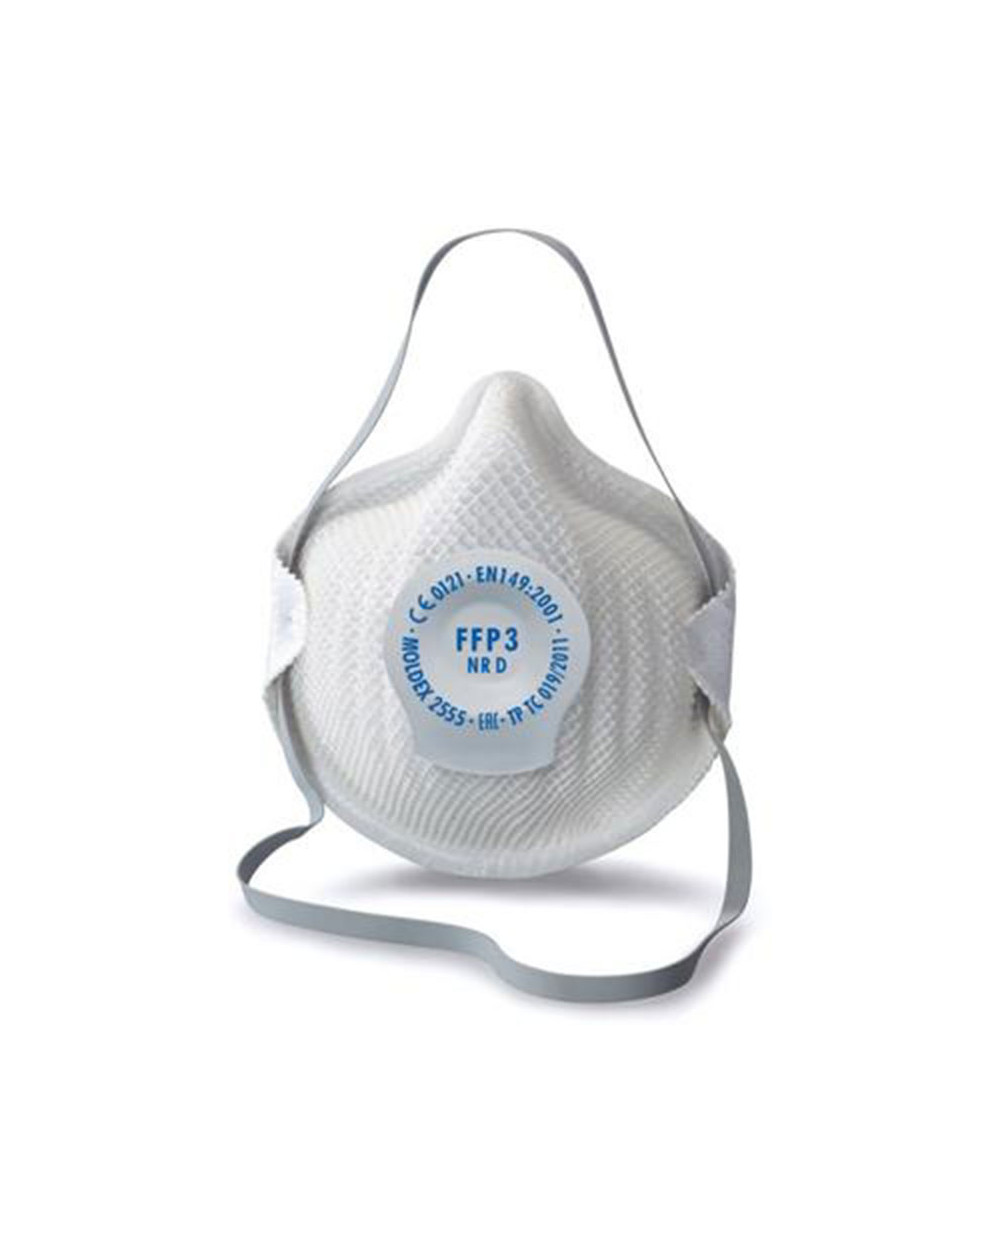 Masque respiratoire M @ NDIL SL FFP3 / V D - PU 5 pièces